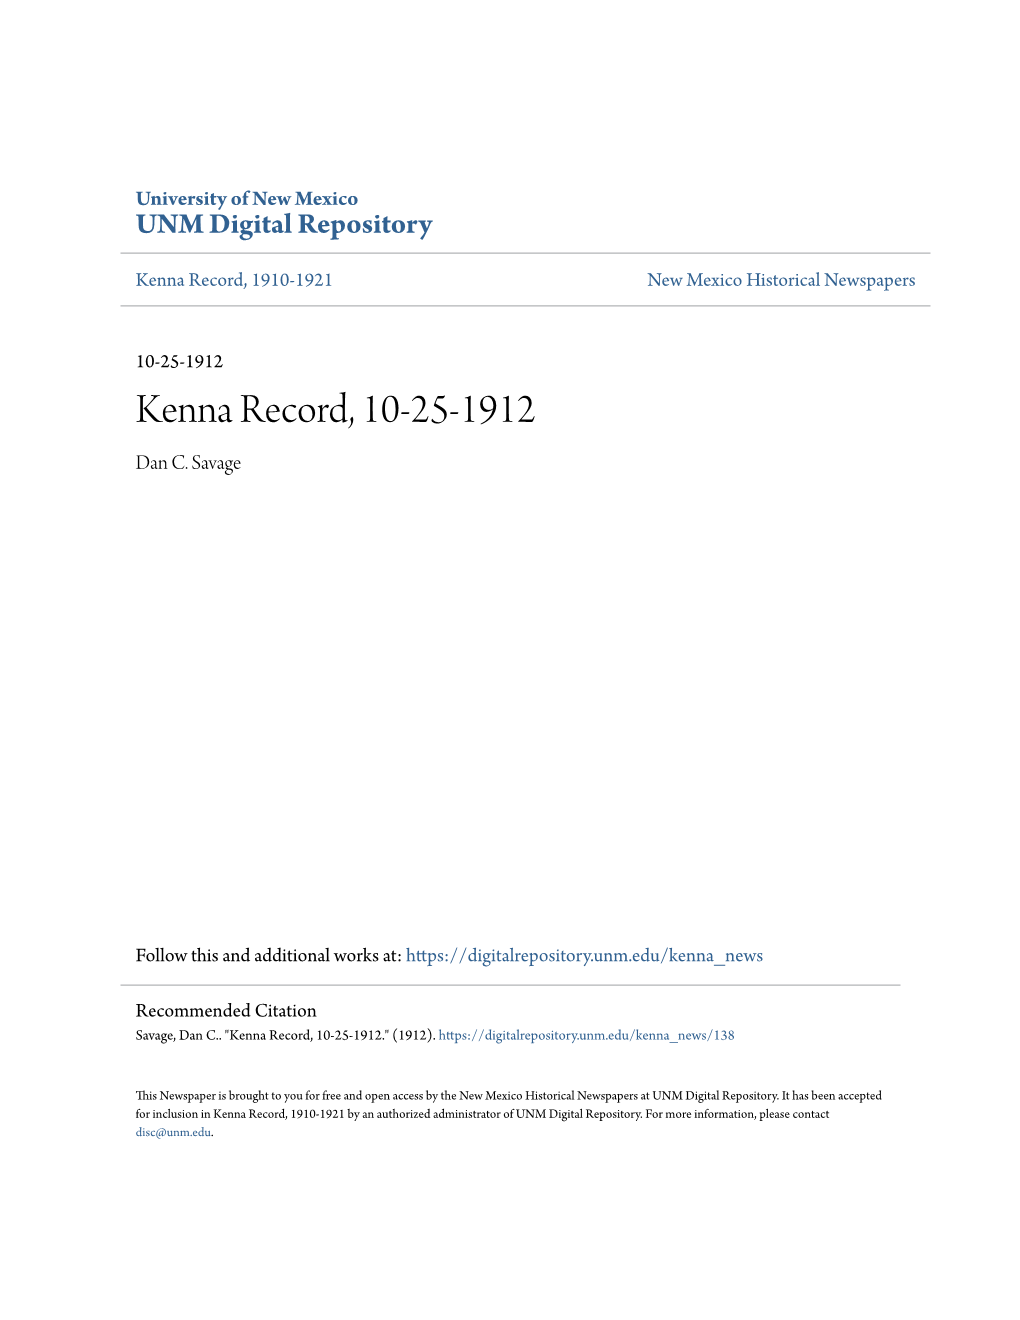 Kenna Record, 10-25-1912 Dan C